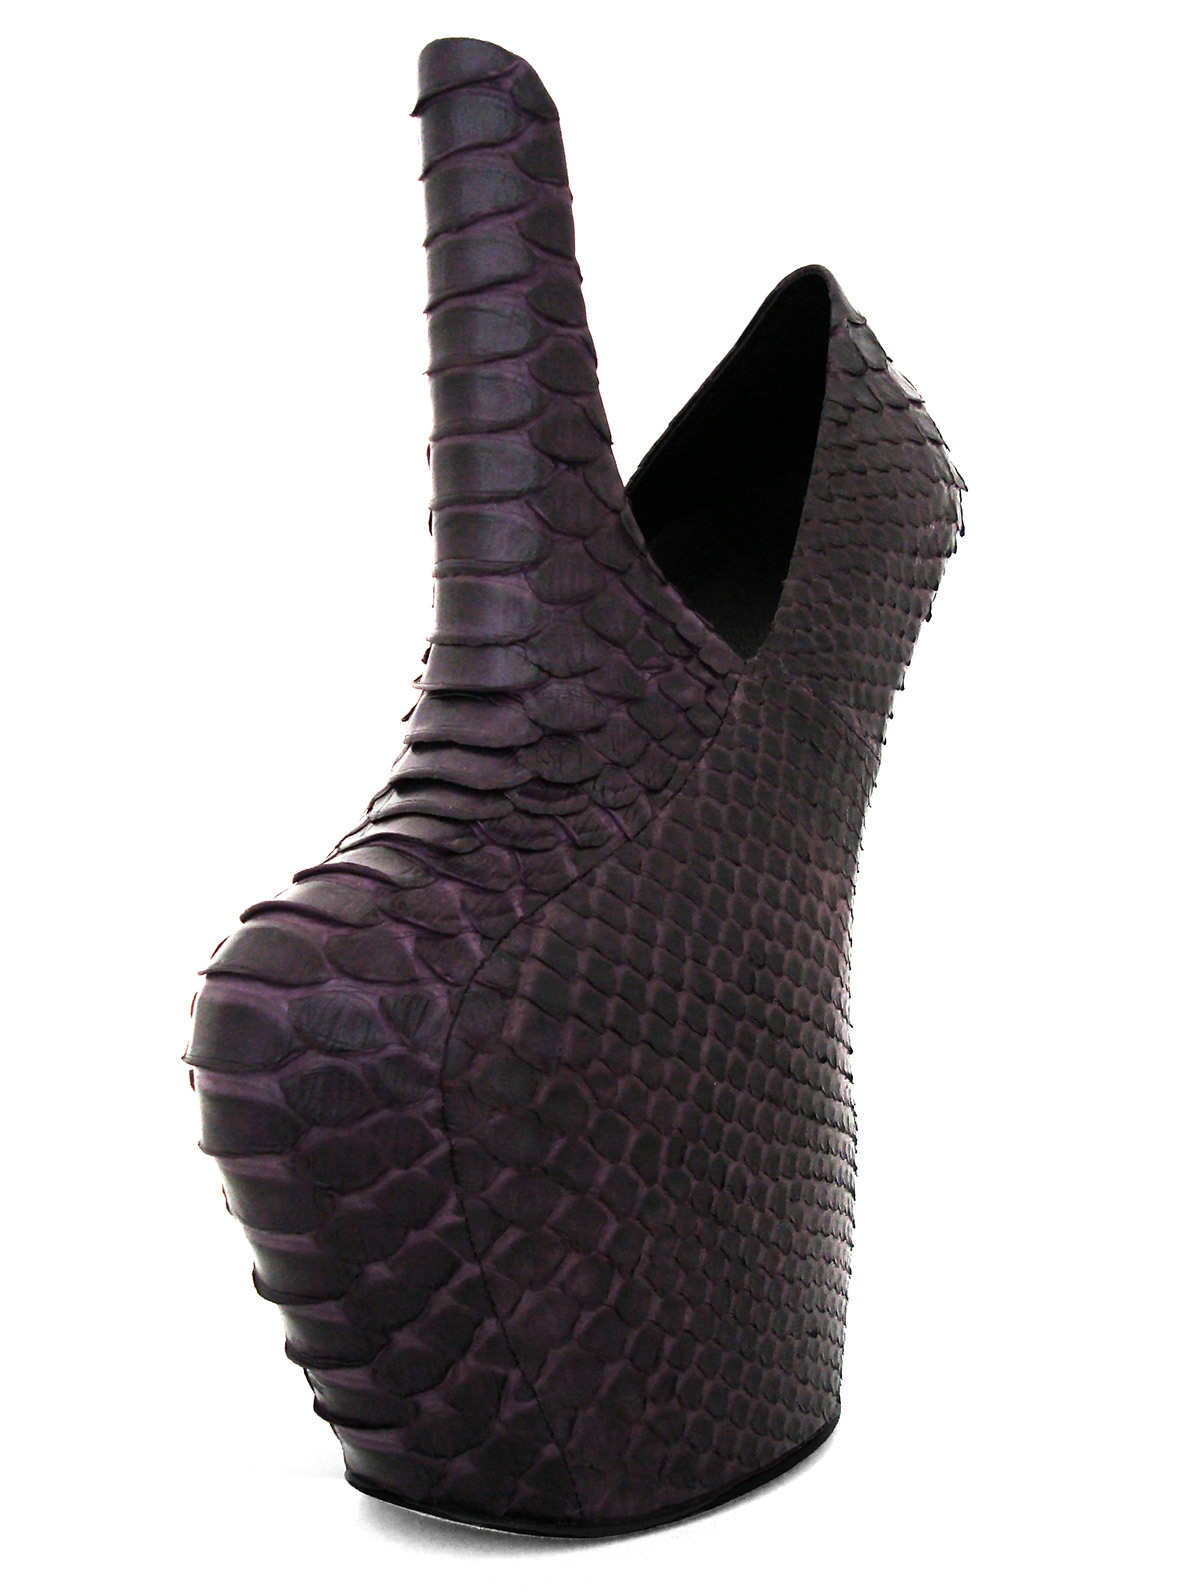 avant garde footwear luxury handcrafted exotic Style heelless design